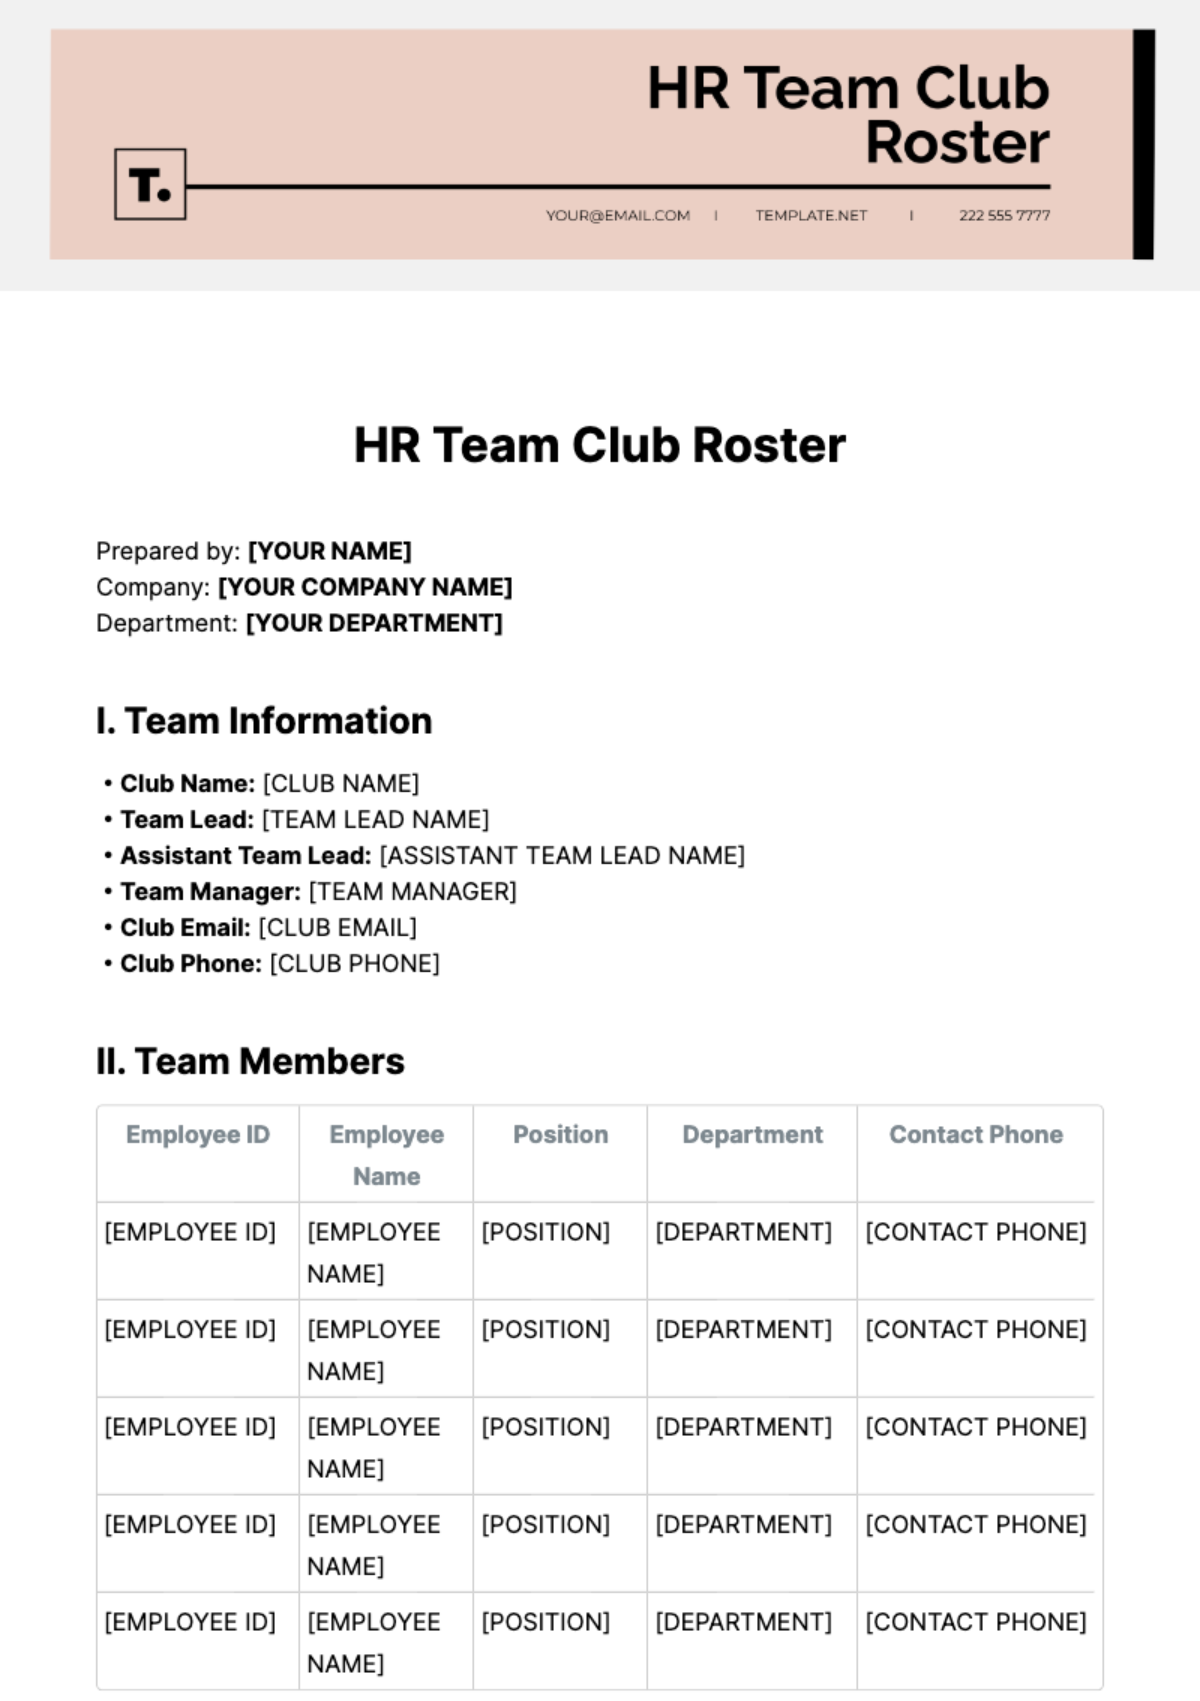 HR Team Club Roster Template